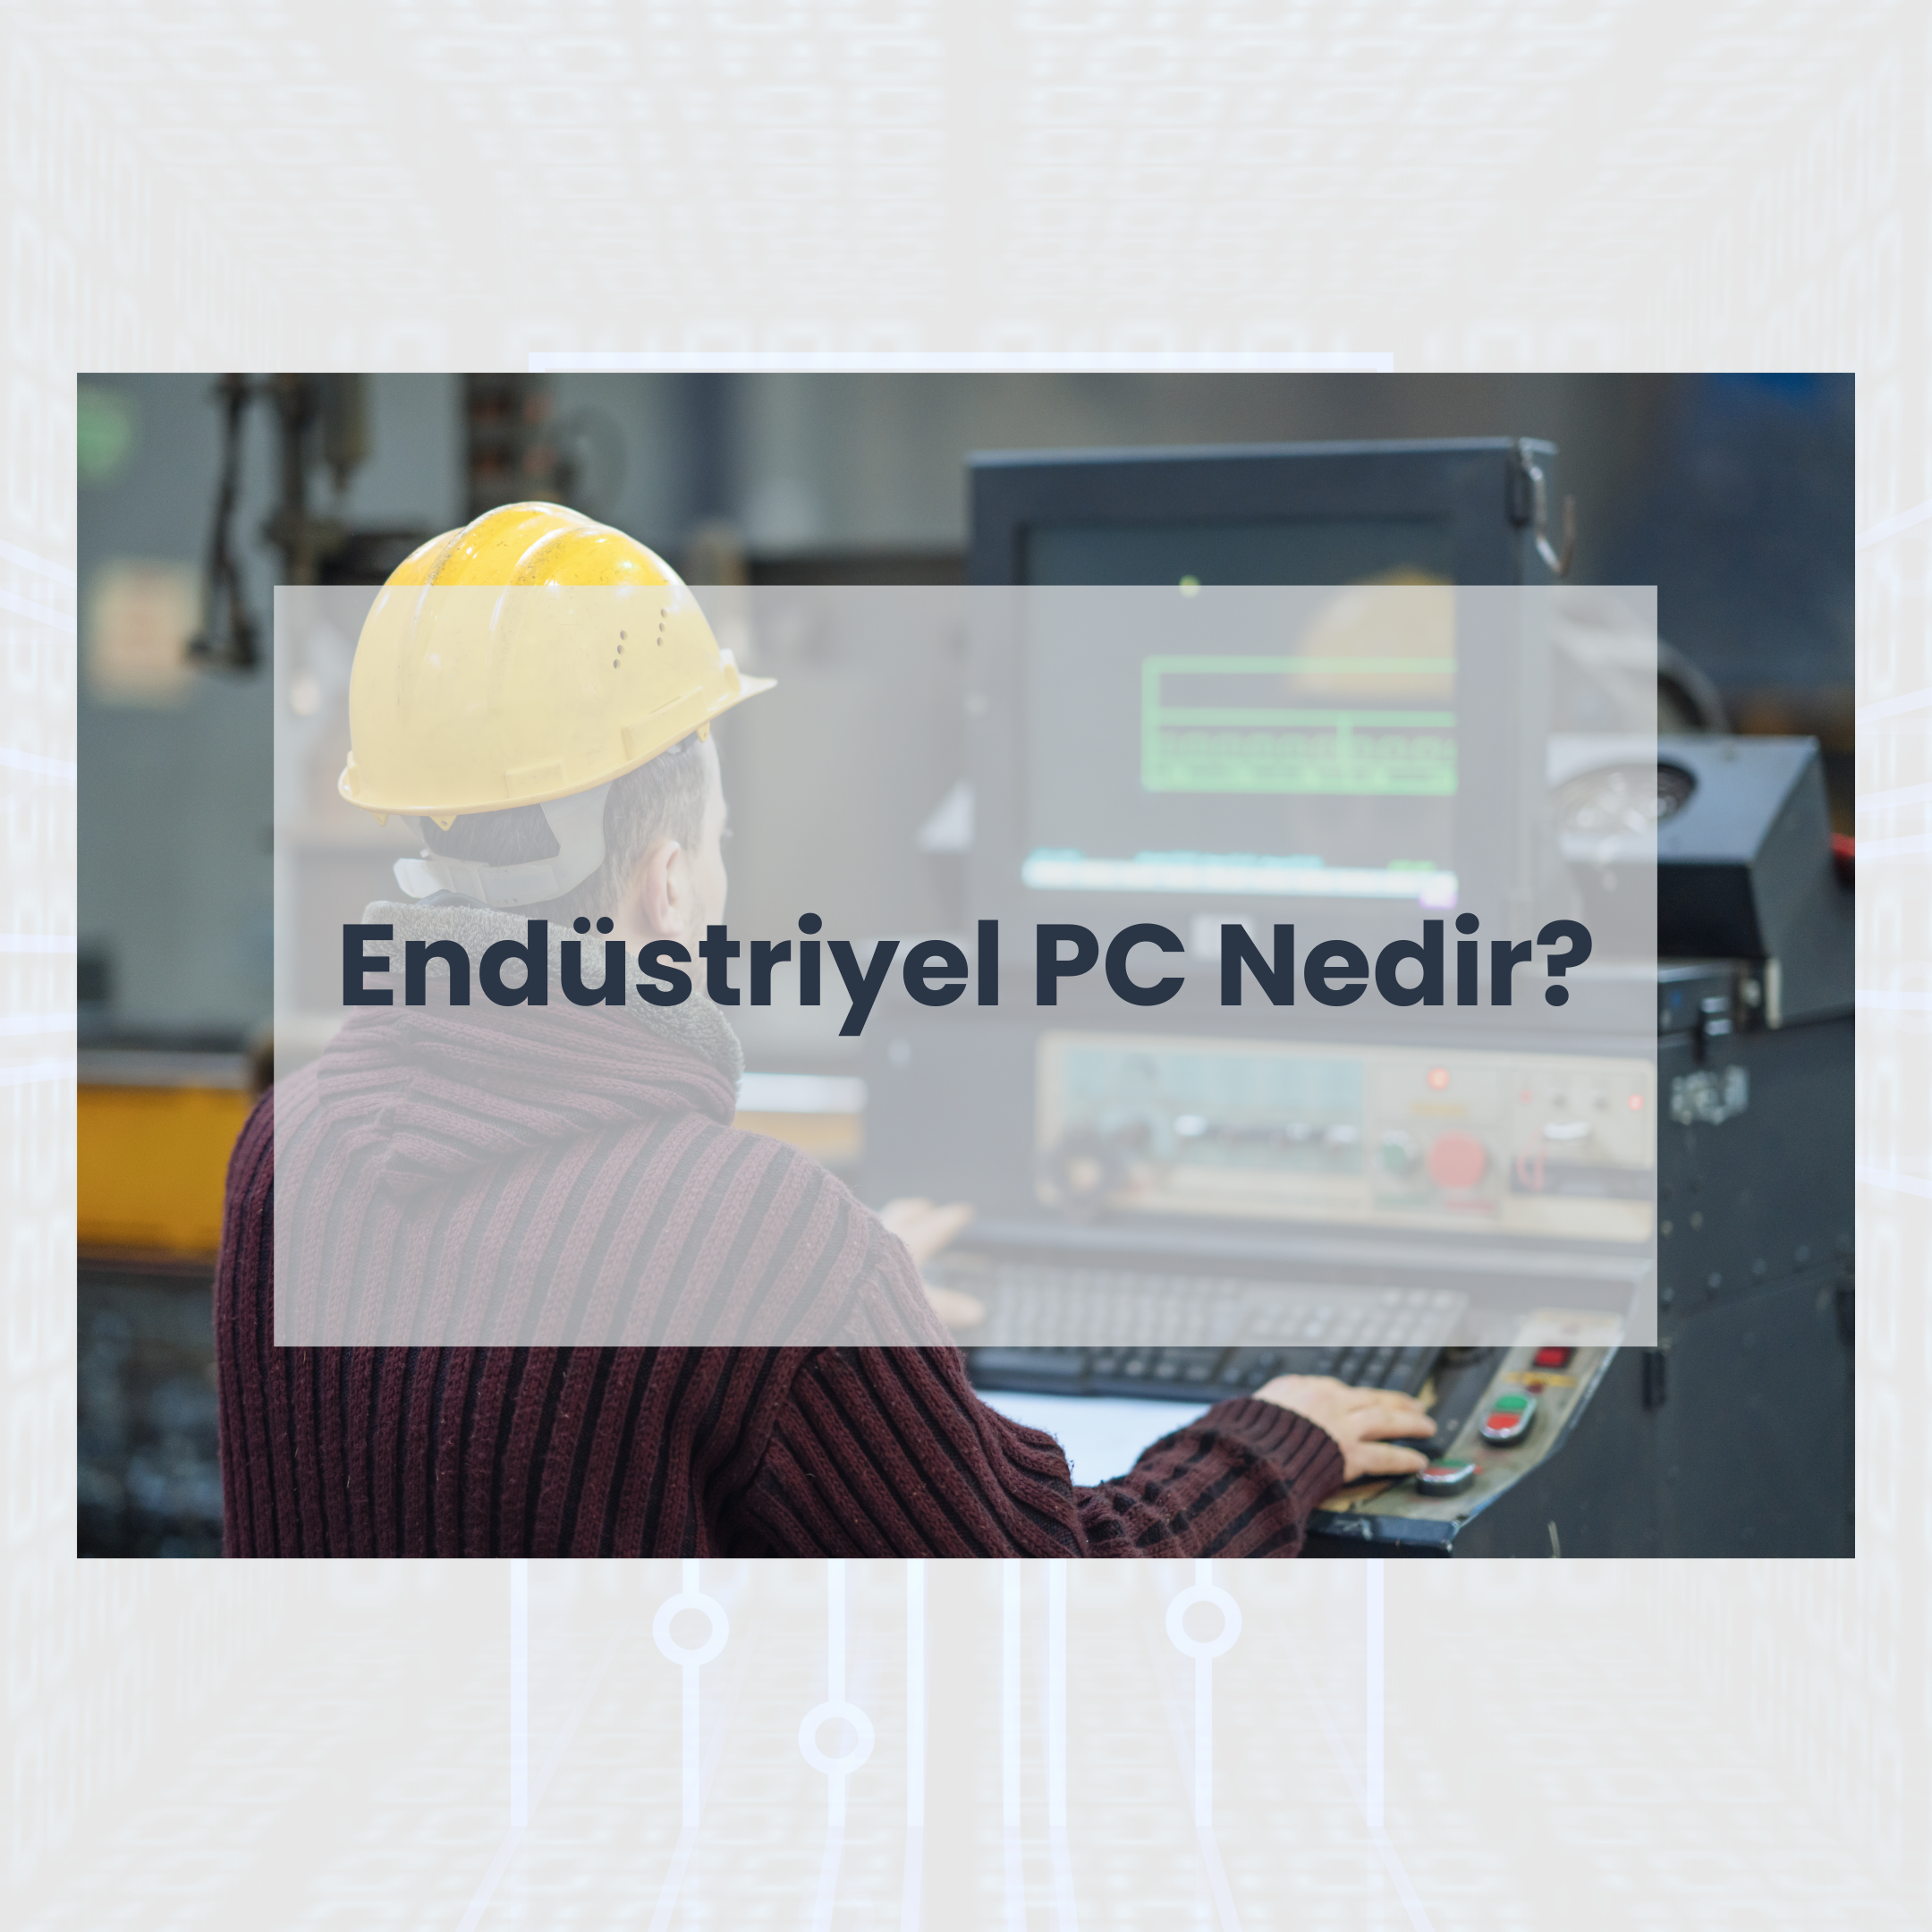 Endüstriyel PC Nedir?